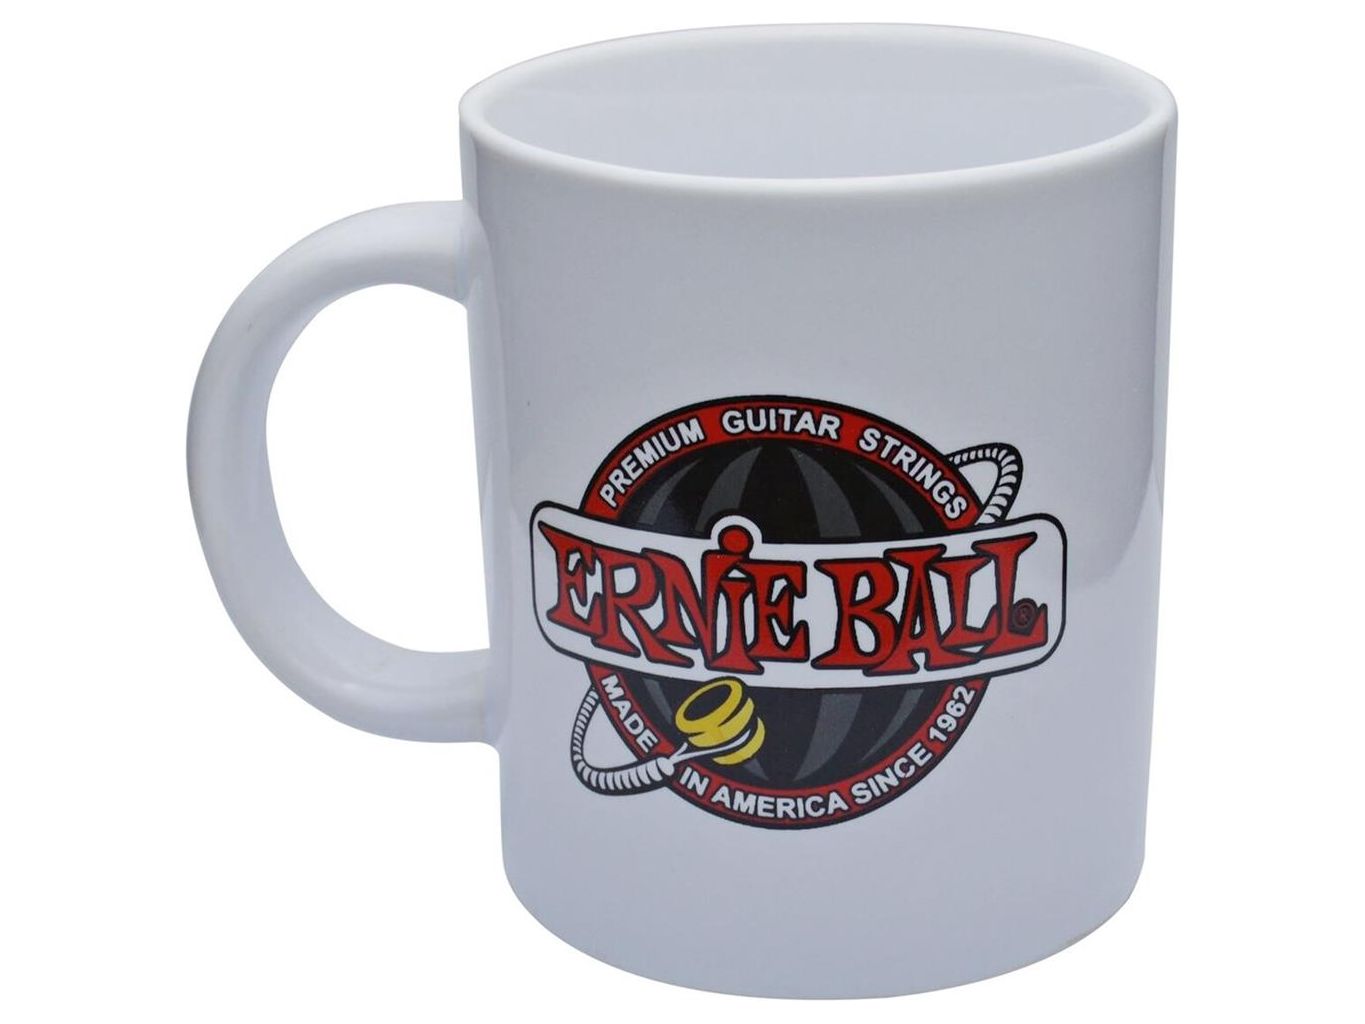 Ernie Ball Logo Mug